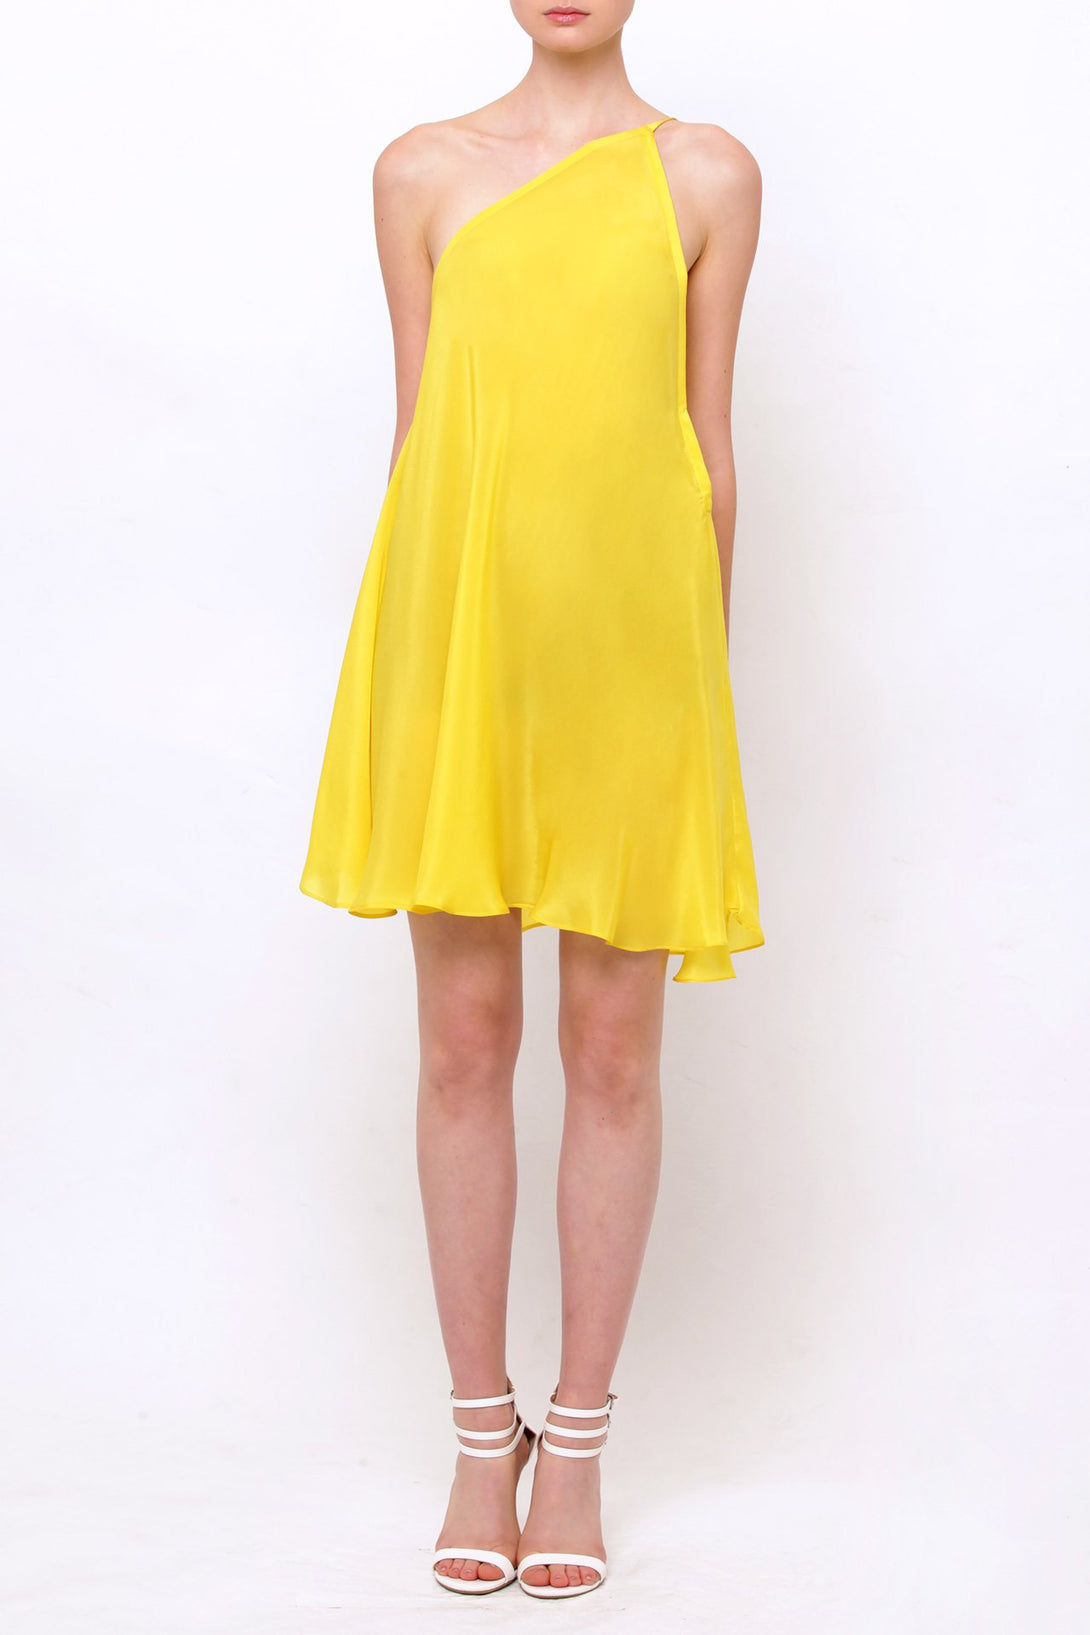  yellow mini dress, Shahida Parides, cute mini dresses, short sleeveless summer dresses,